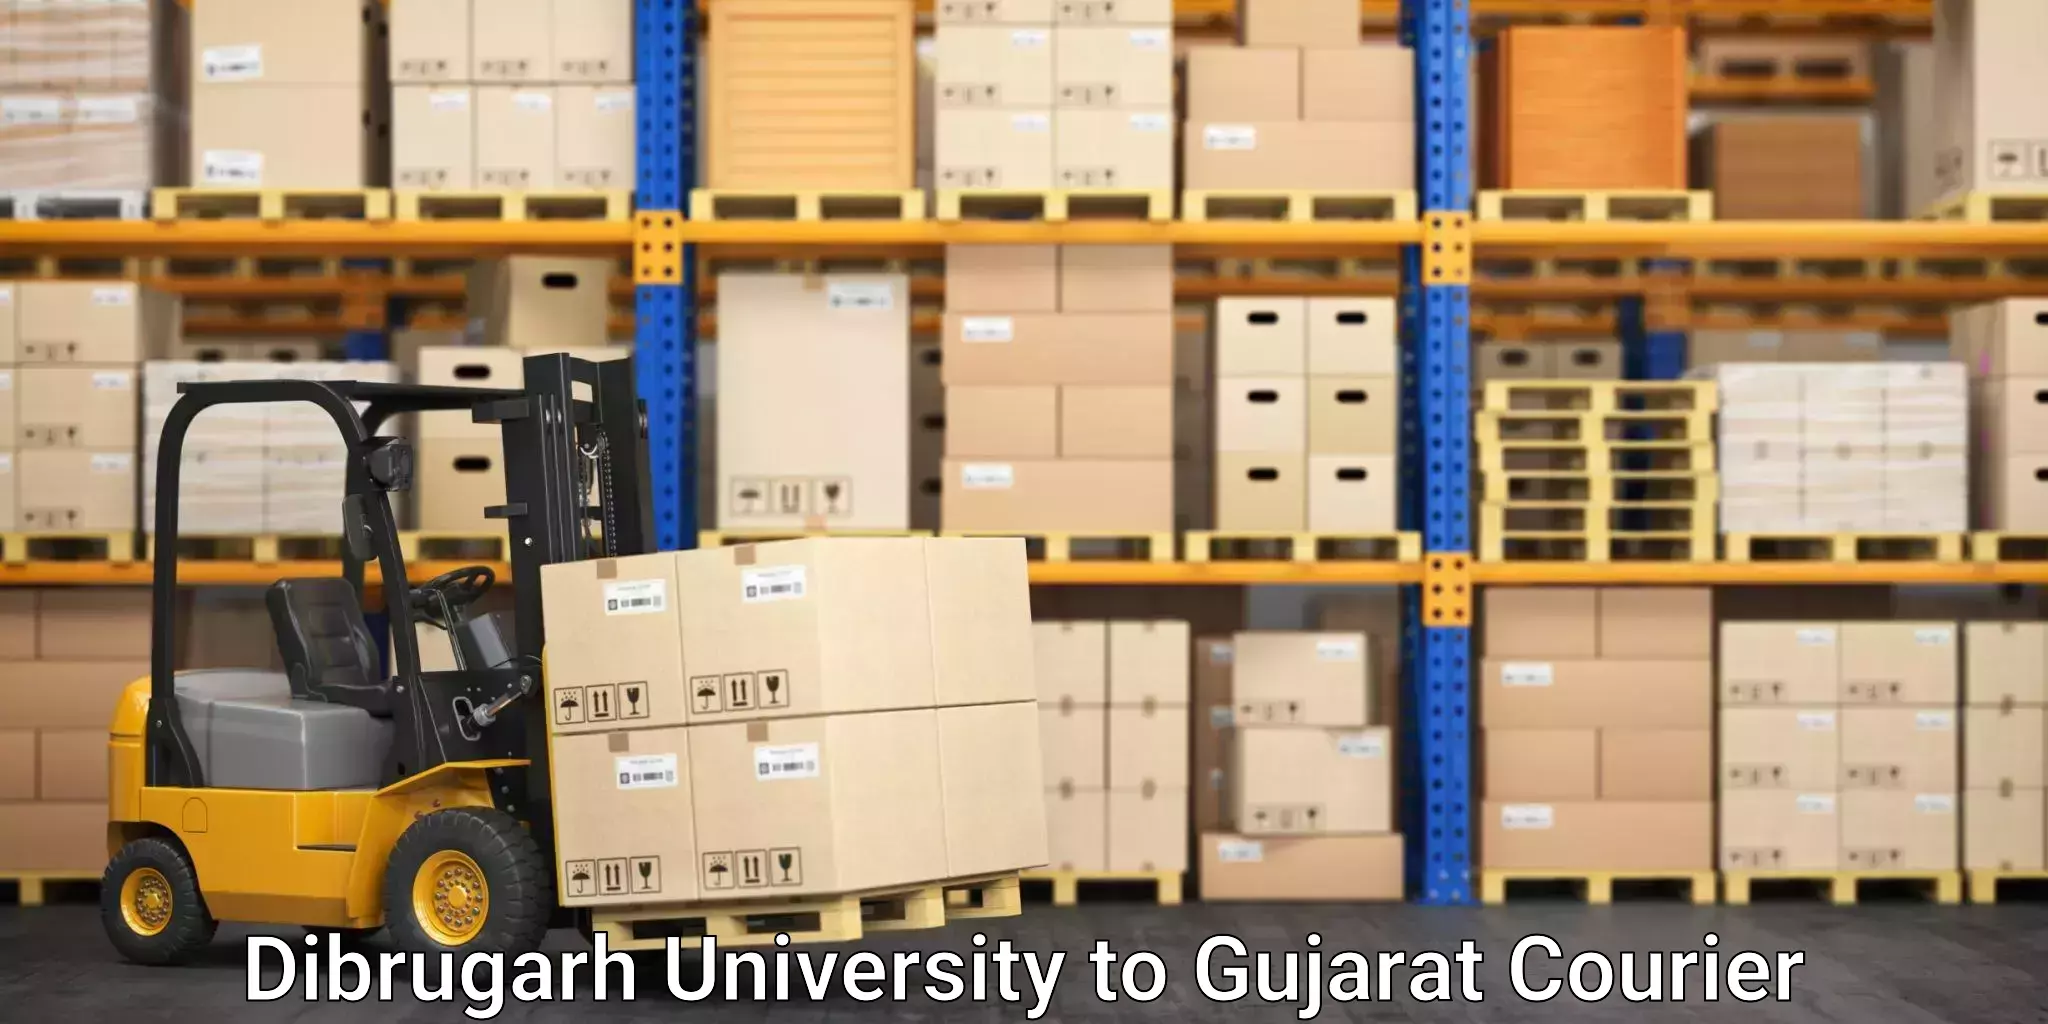 Reliable courier service Dibrugarh University to Jasdan